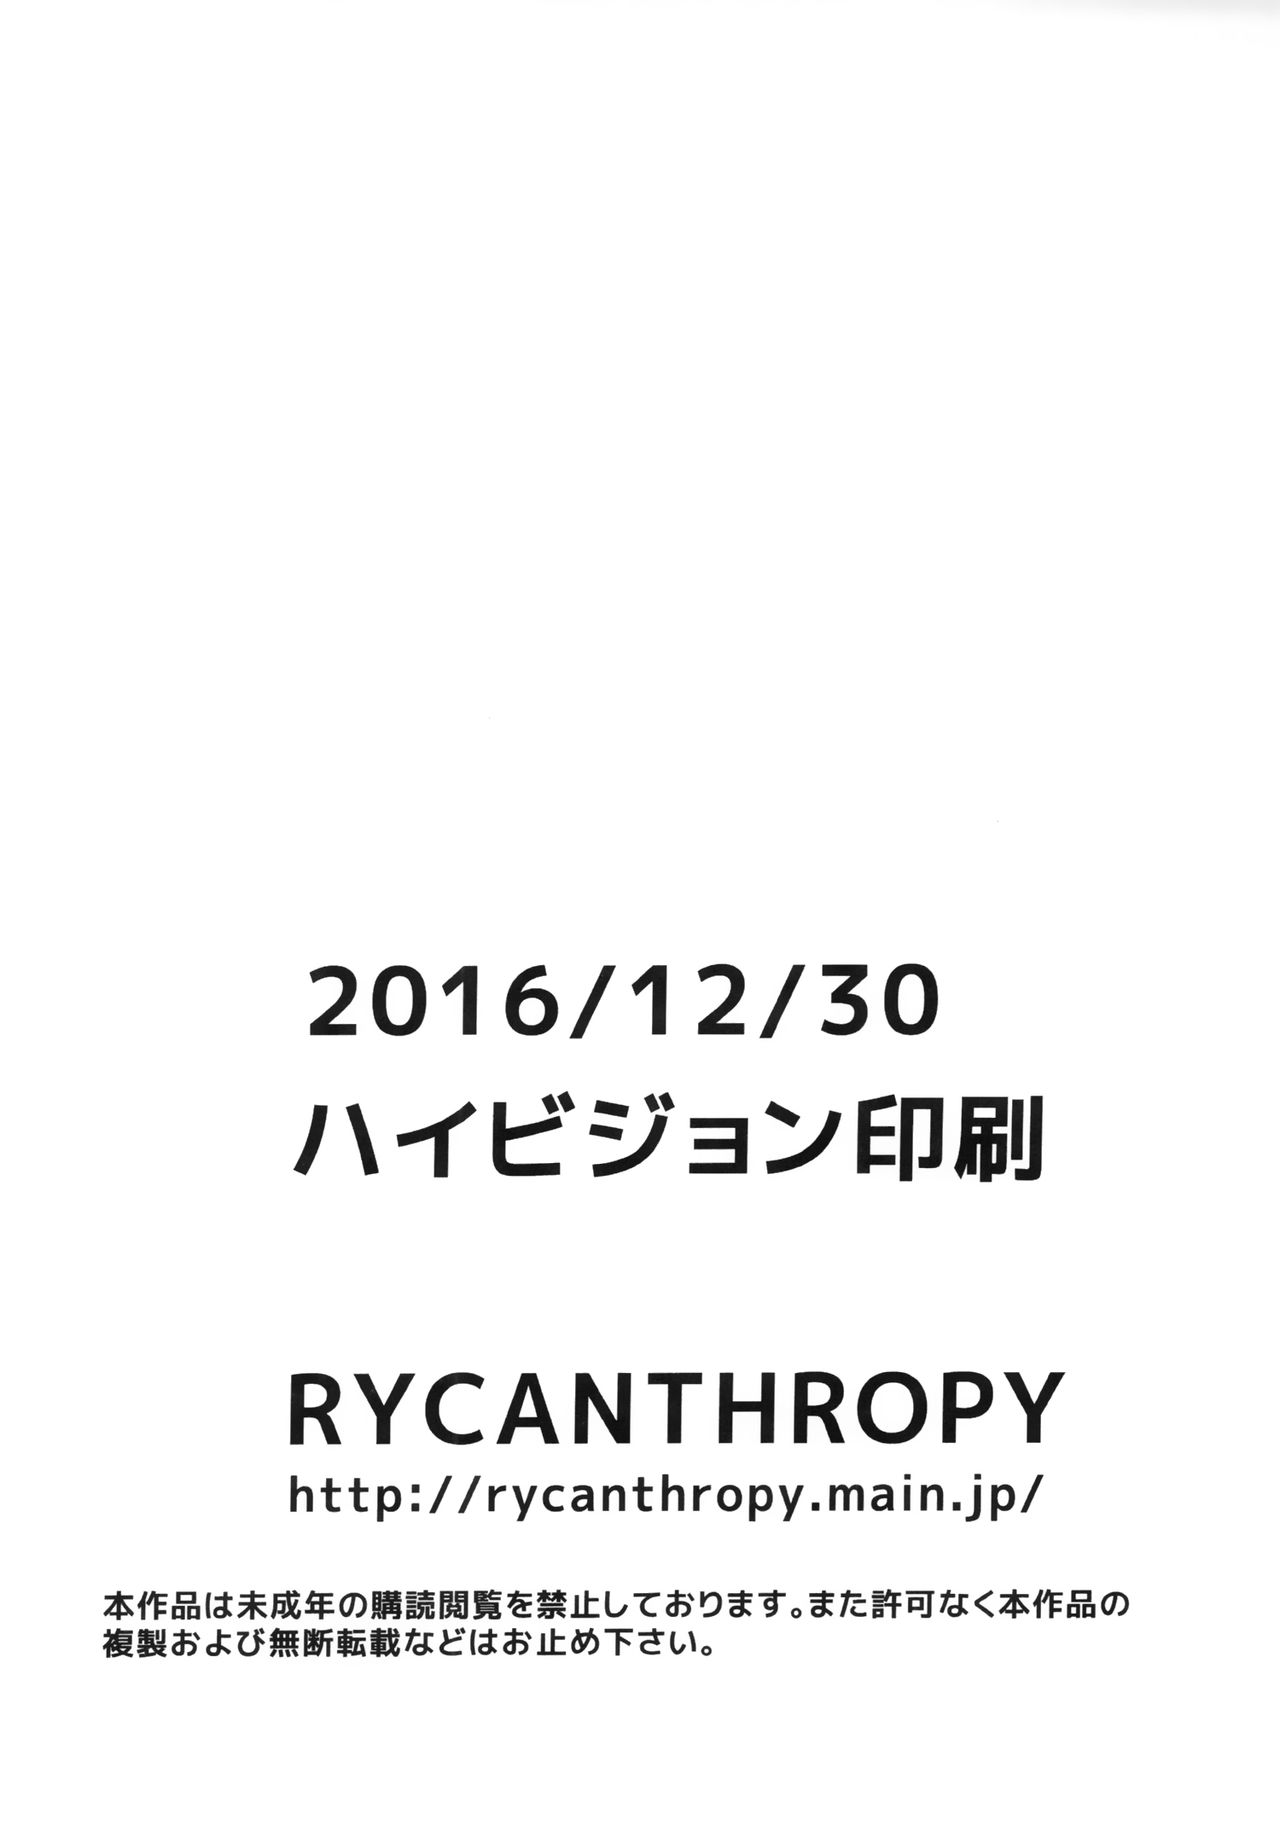 Gai Mizuki 水樹凱 Rycanthropy Final Fantasy ファイナルファンタジー XV Scutum Gladiolus Amicitia グラディオラス・アミシティア